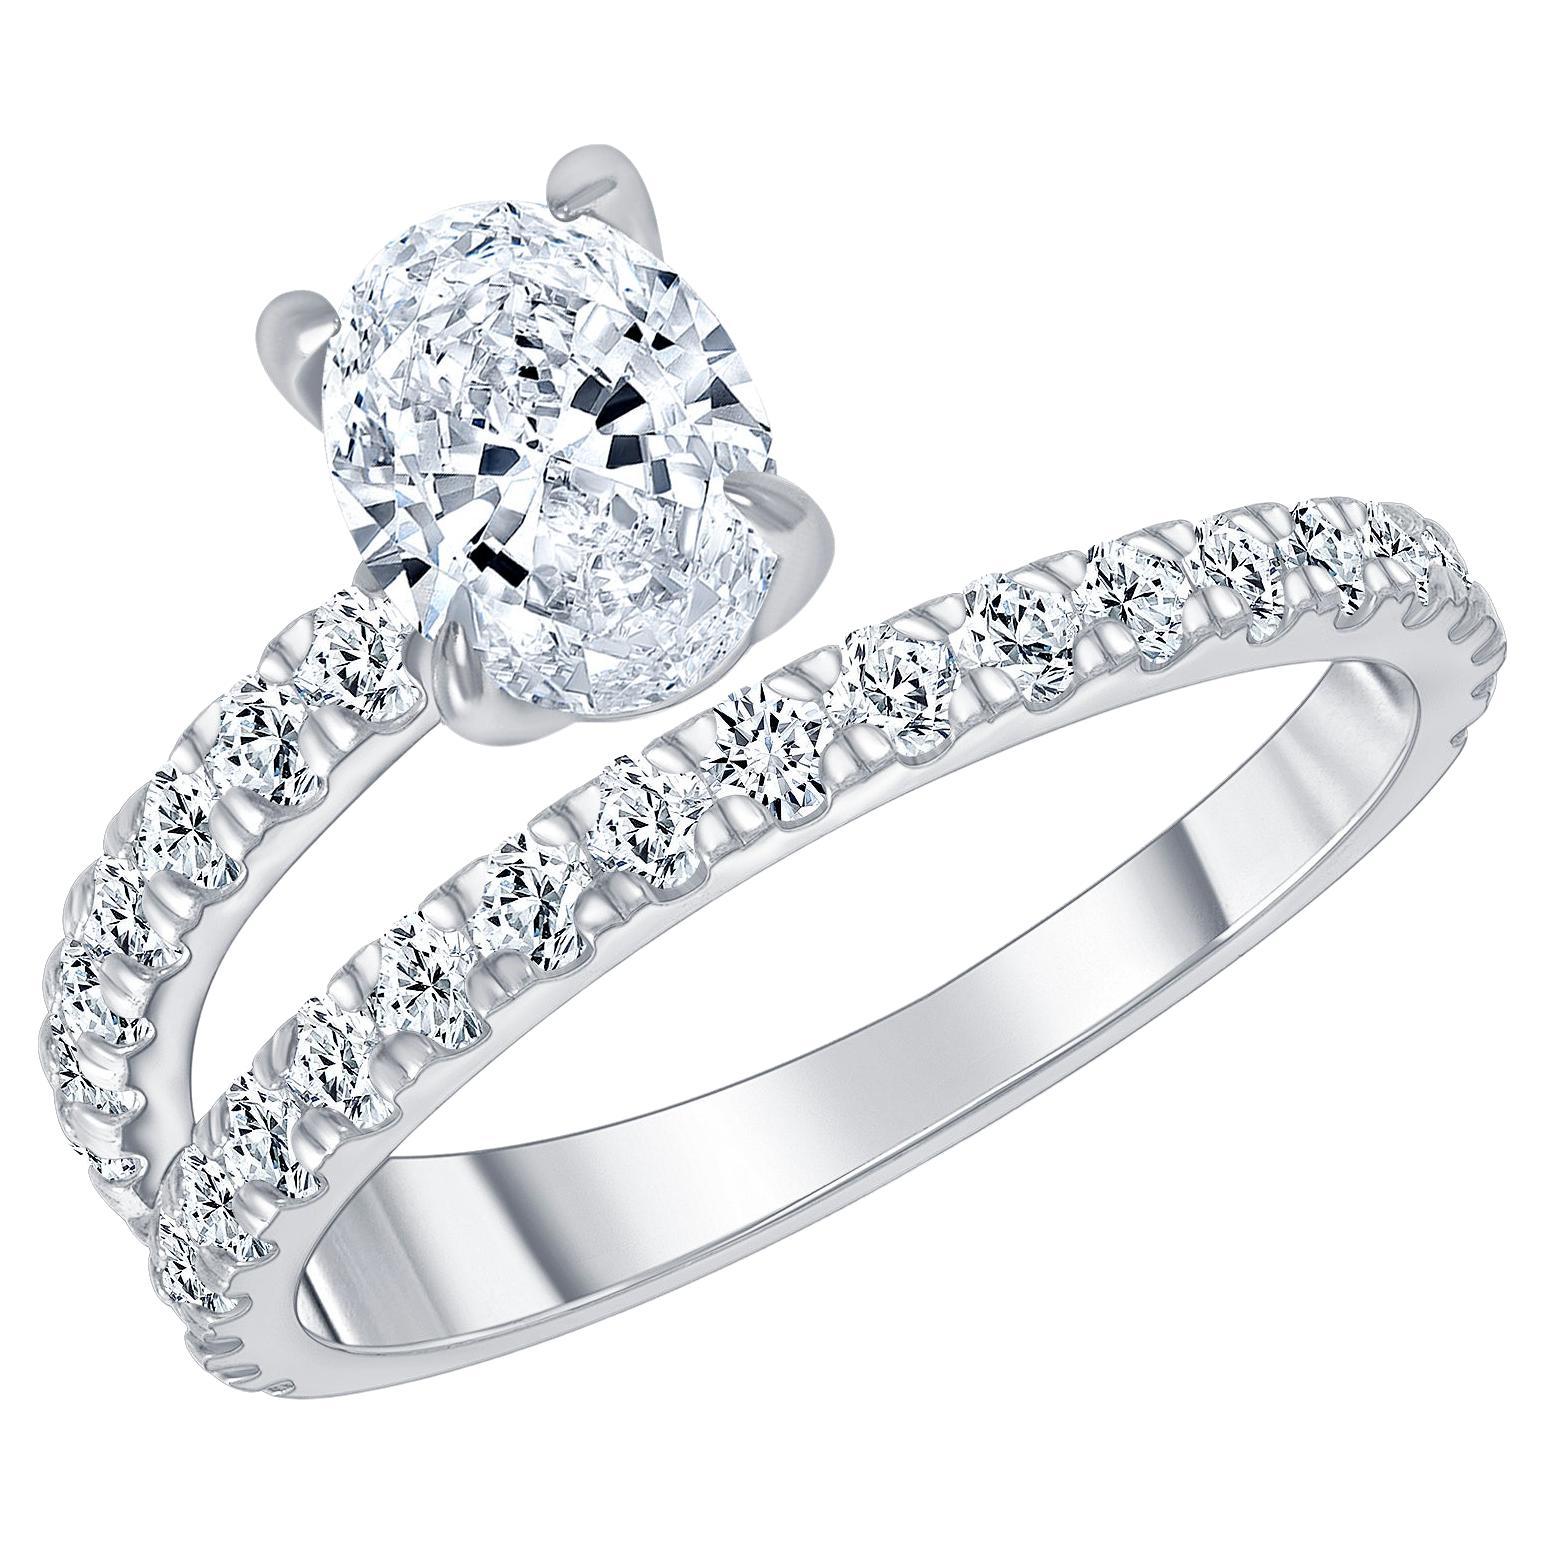 For Sale:  0.75 Carat Oval Cut Diamond Engagement Ring Design, '0.50 Carat Center Diamond'